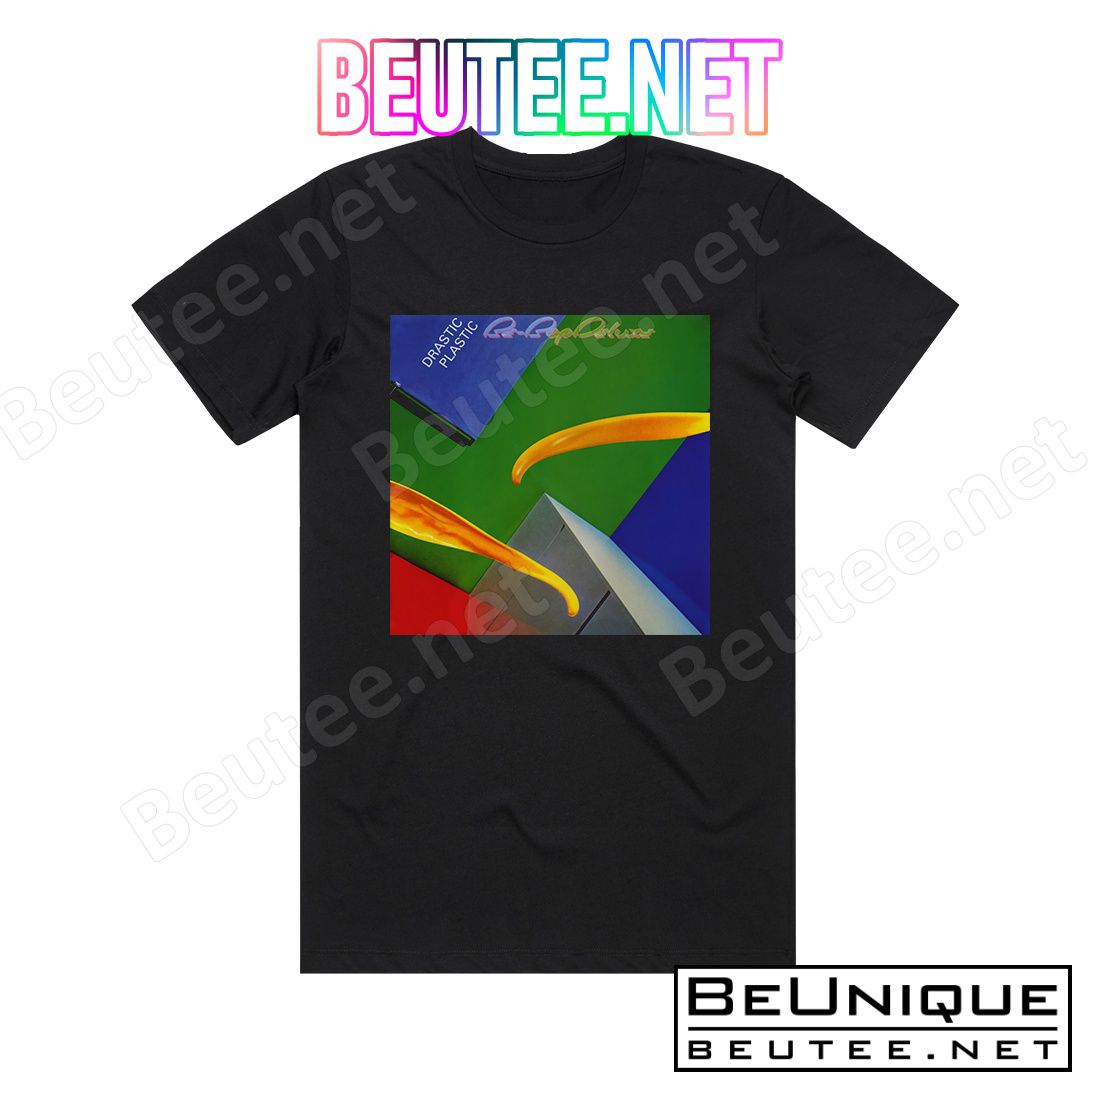 Be Bop Deluxe Drastic Plastic Album Cover T-Shirt